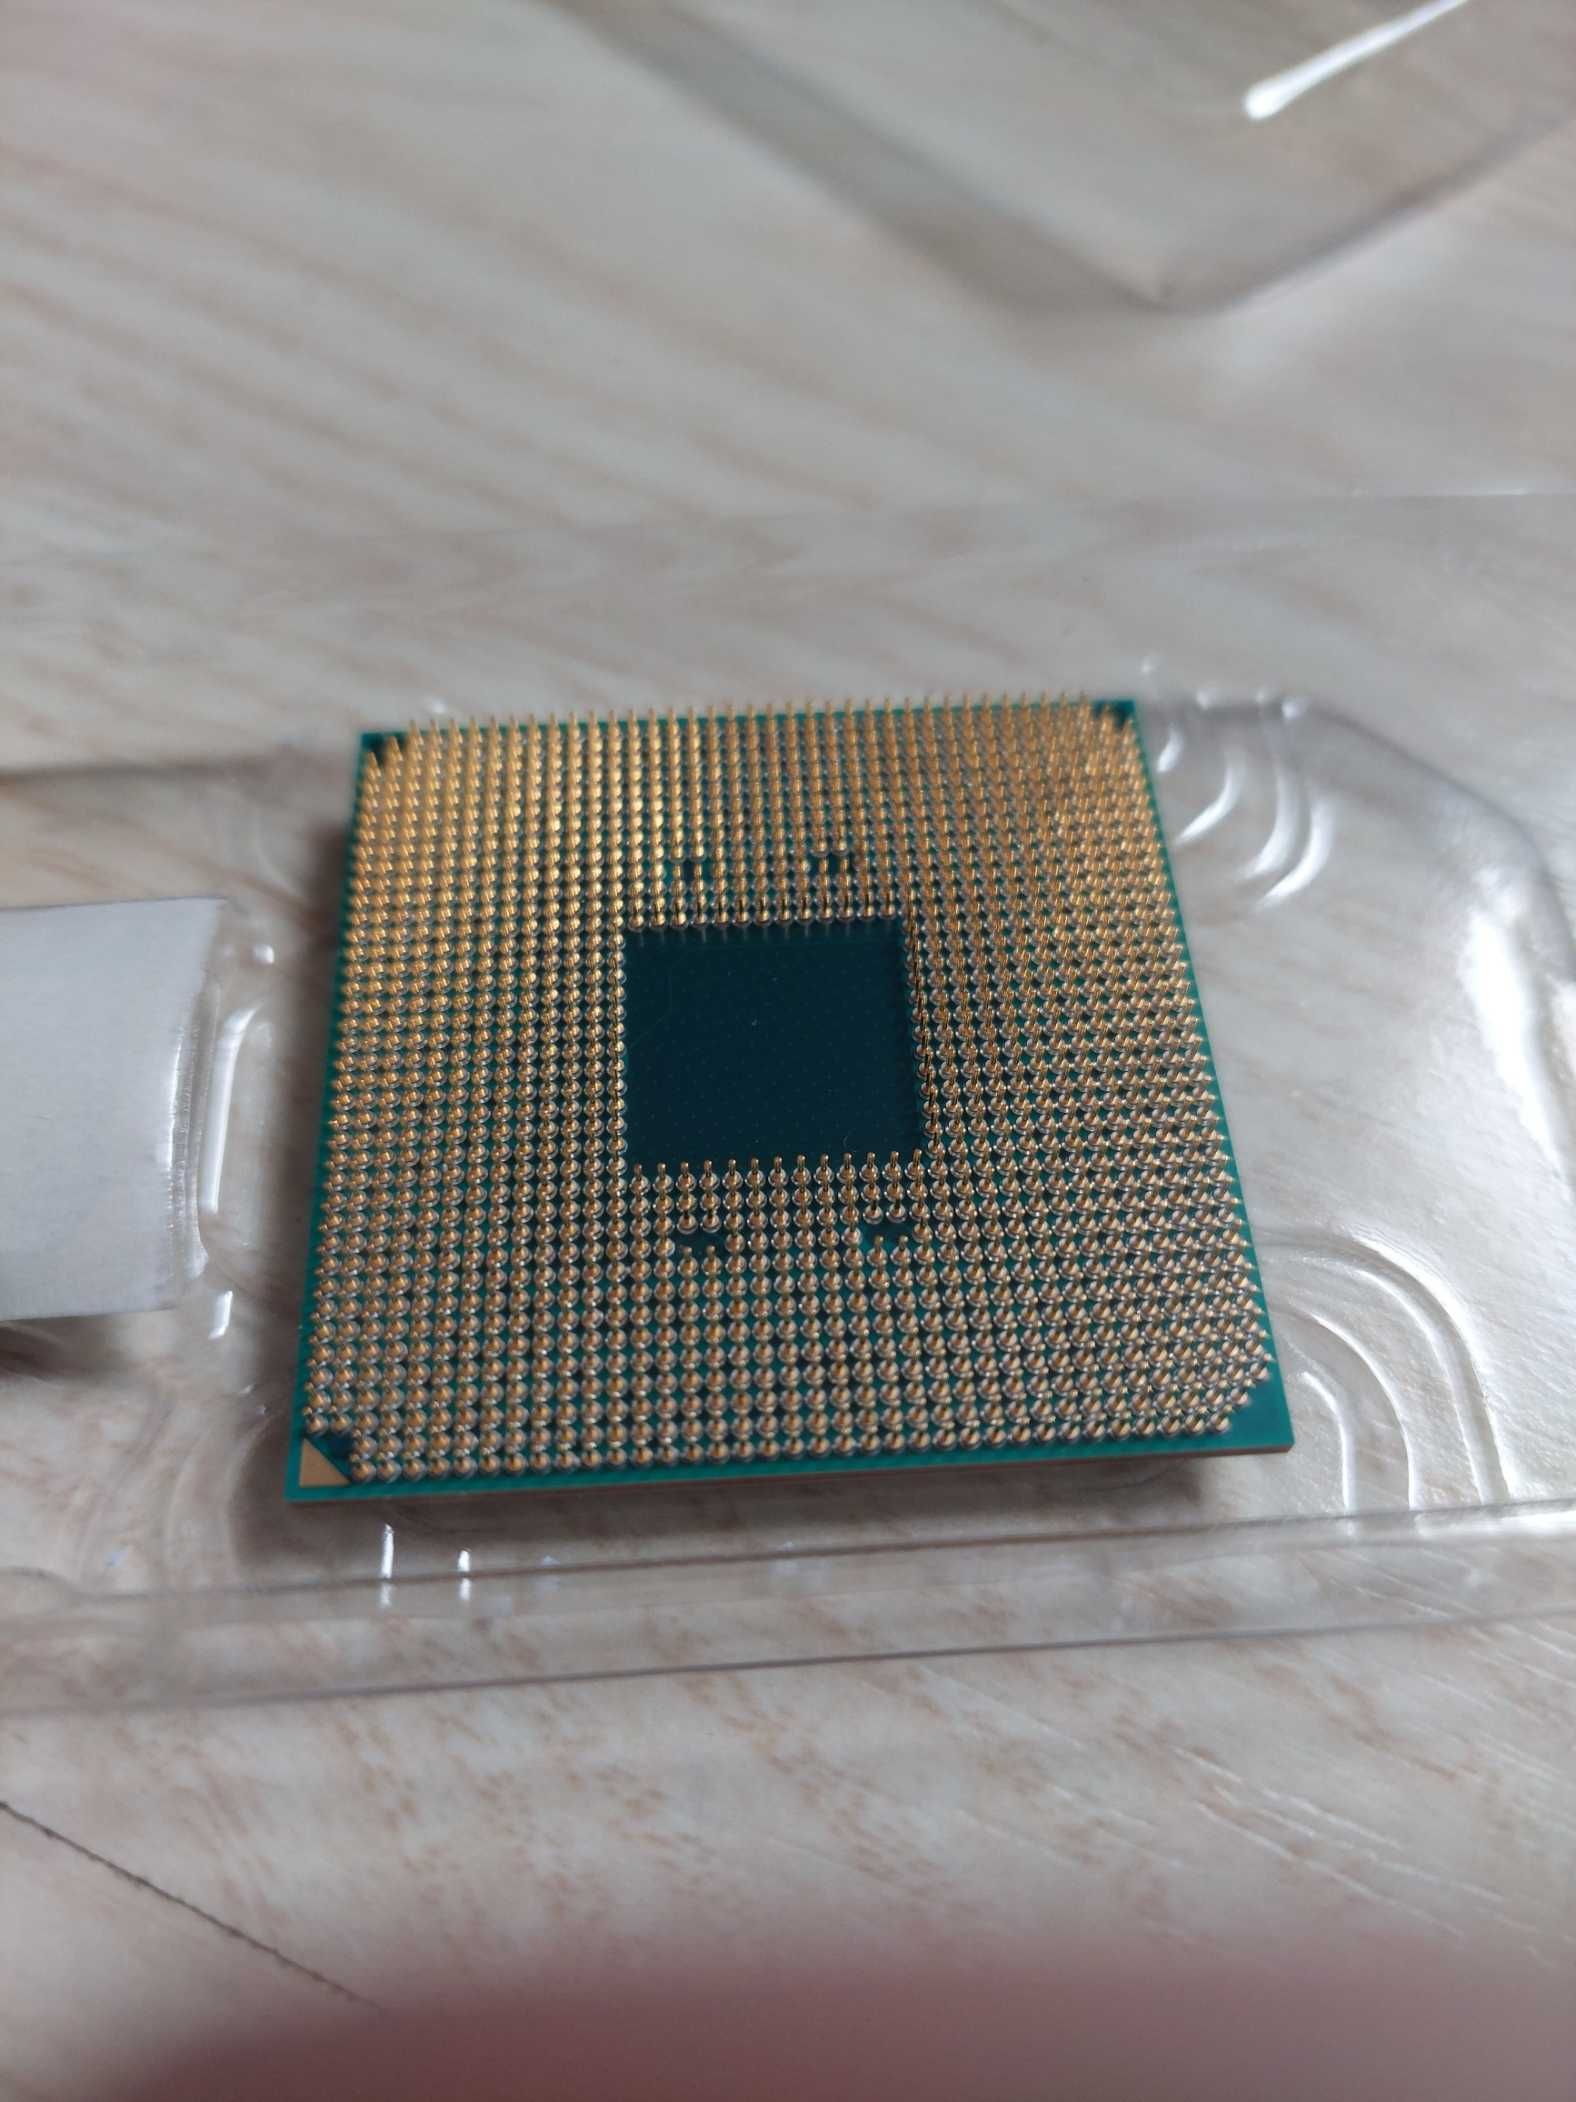 AMD Ryzen 3 1200 BOX (процессор + кулер) Б/У